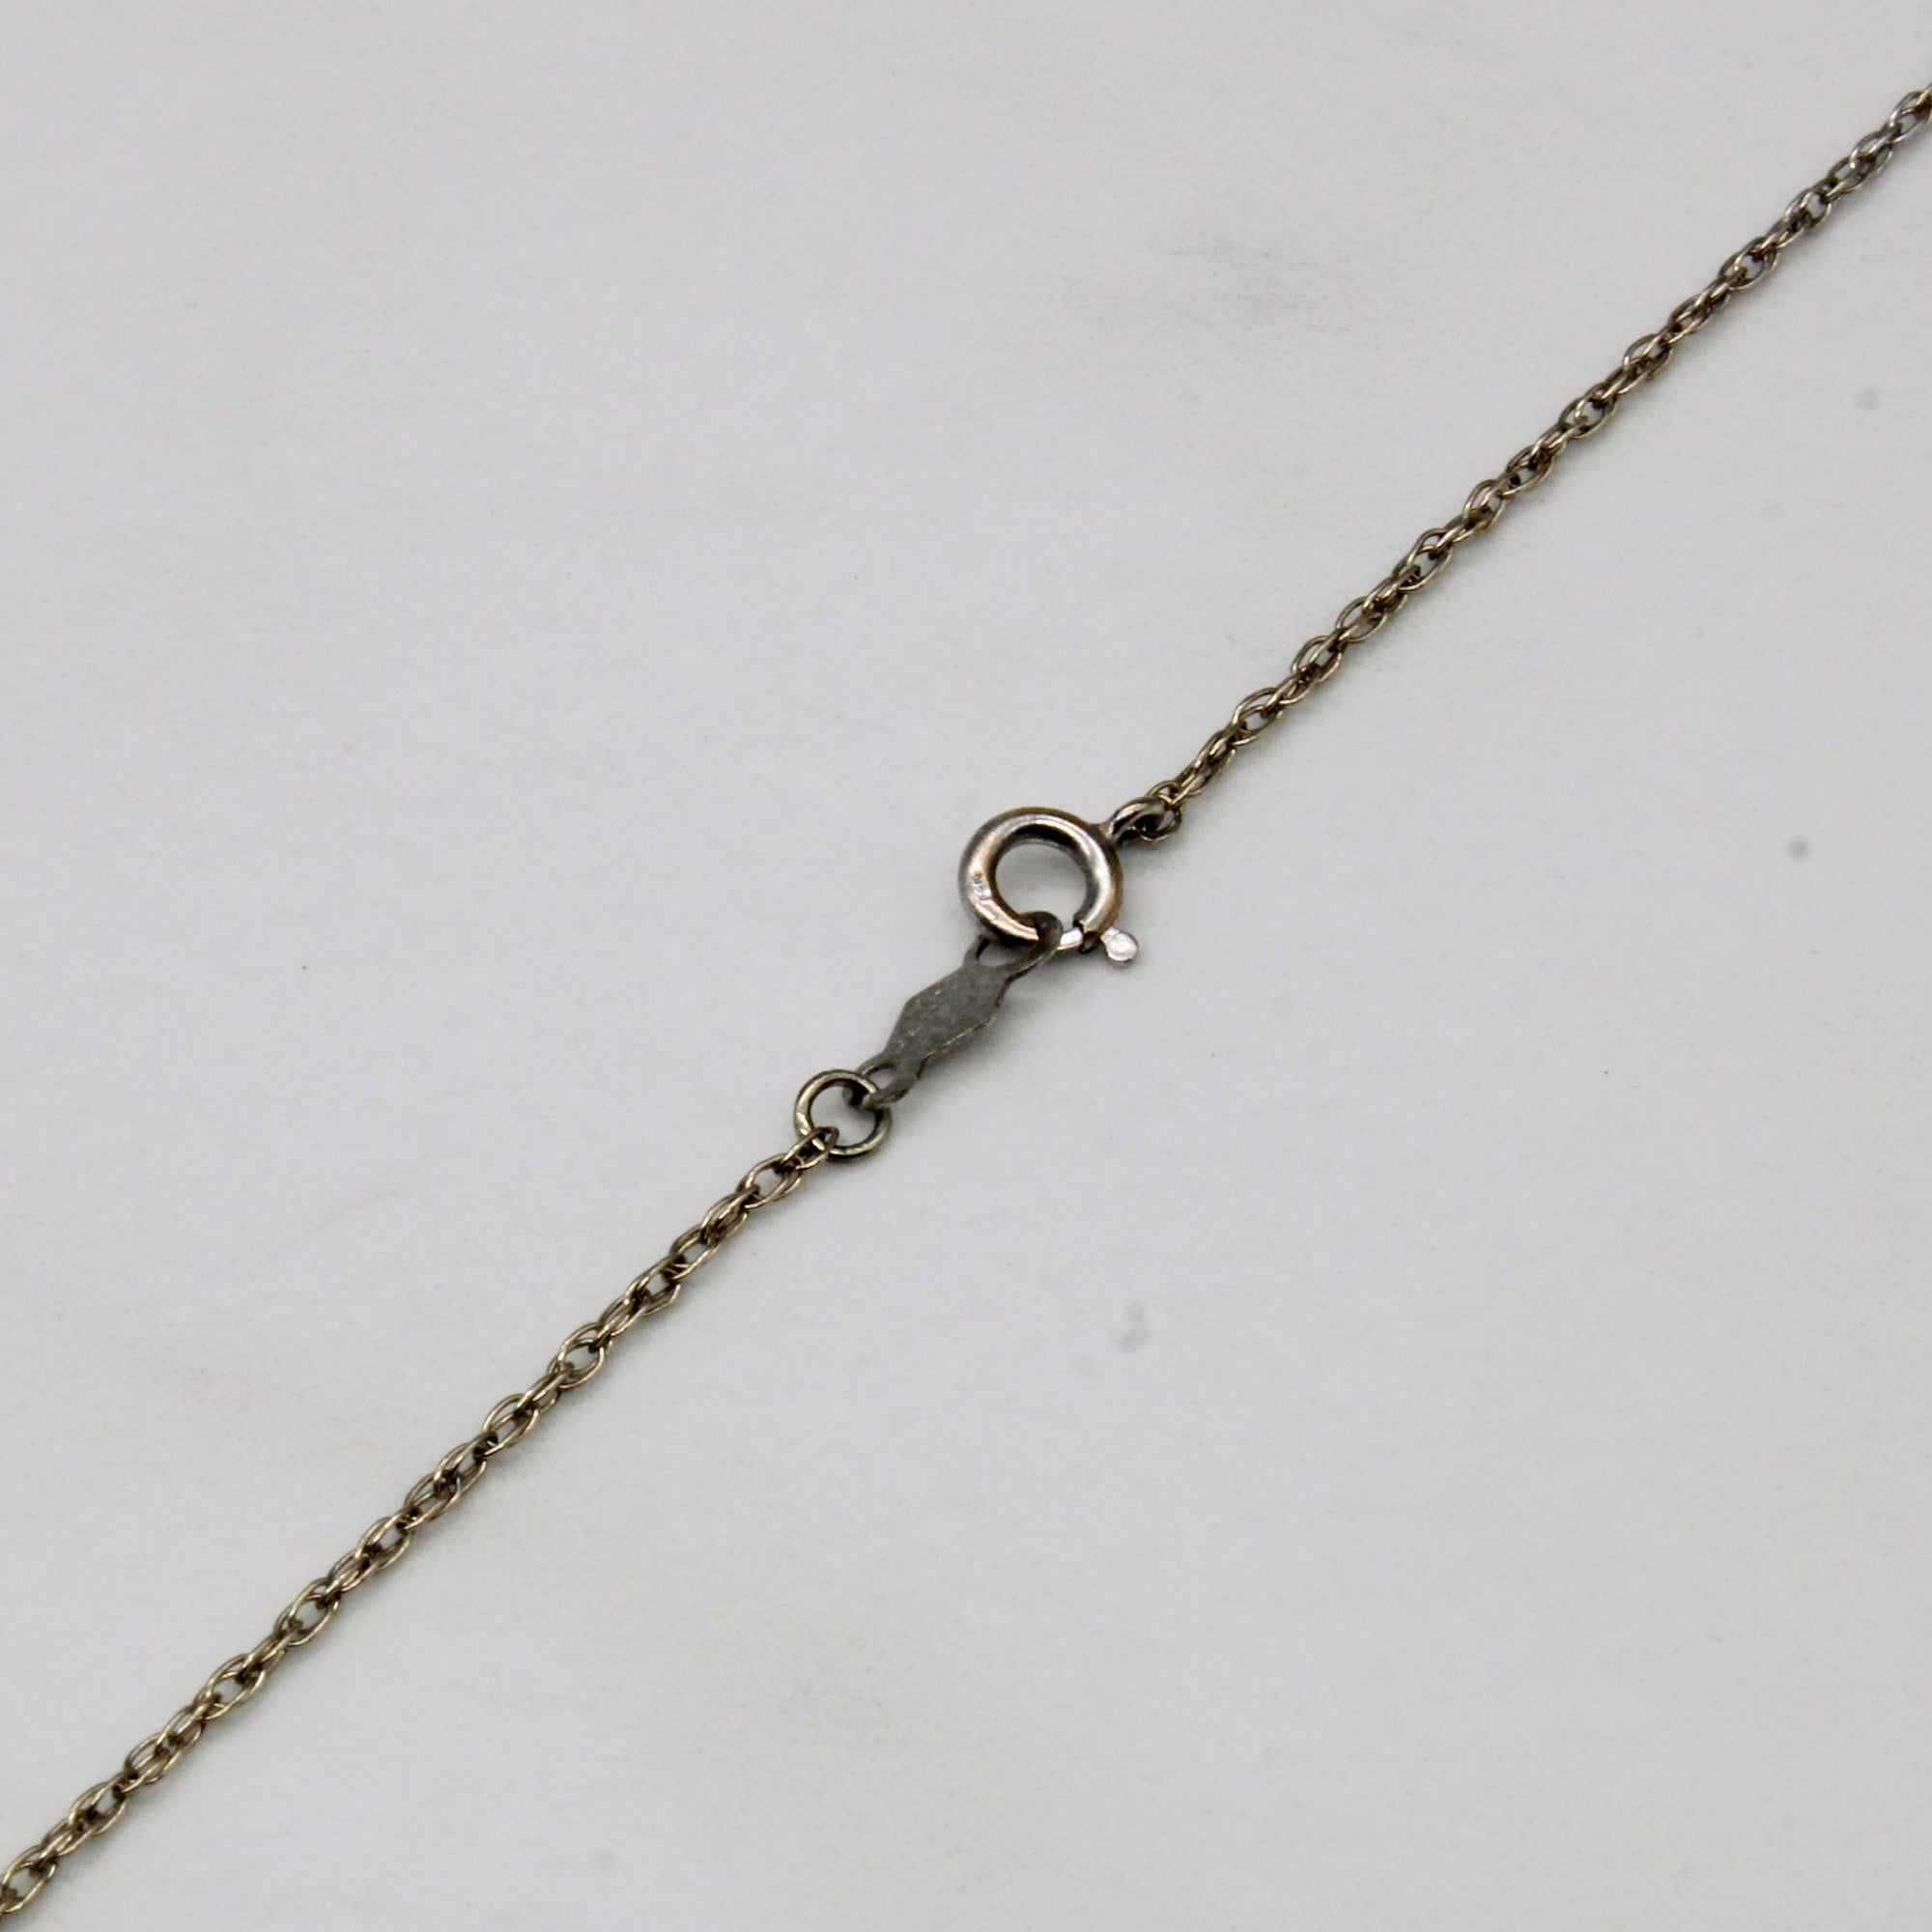 Diamond Accent 14k White Gold Necklace | 15